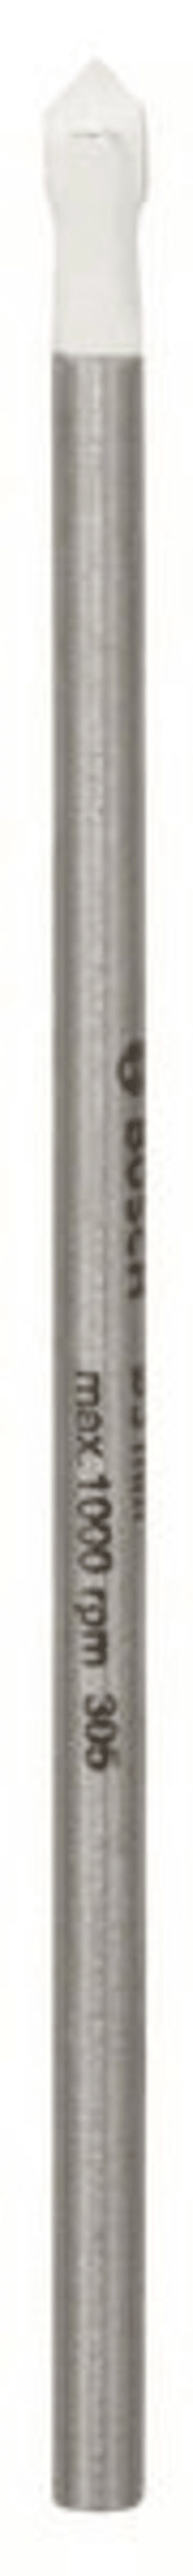 Bosch Fliesenbohrer CYL-9 Softceramic